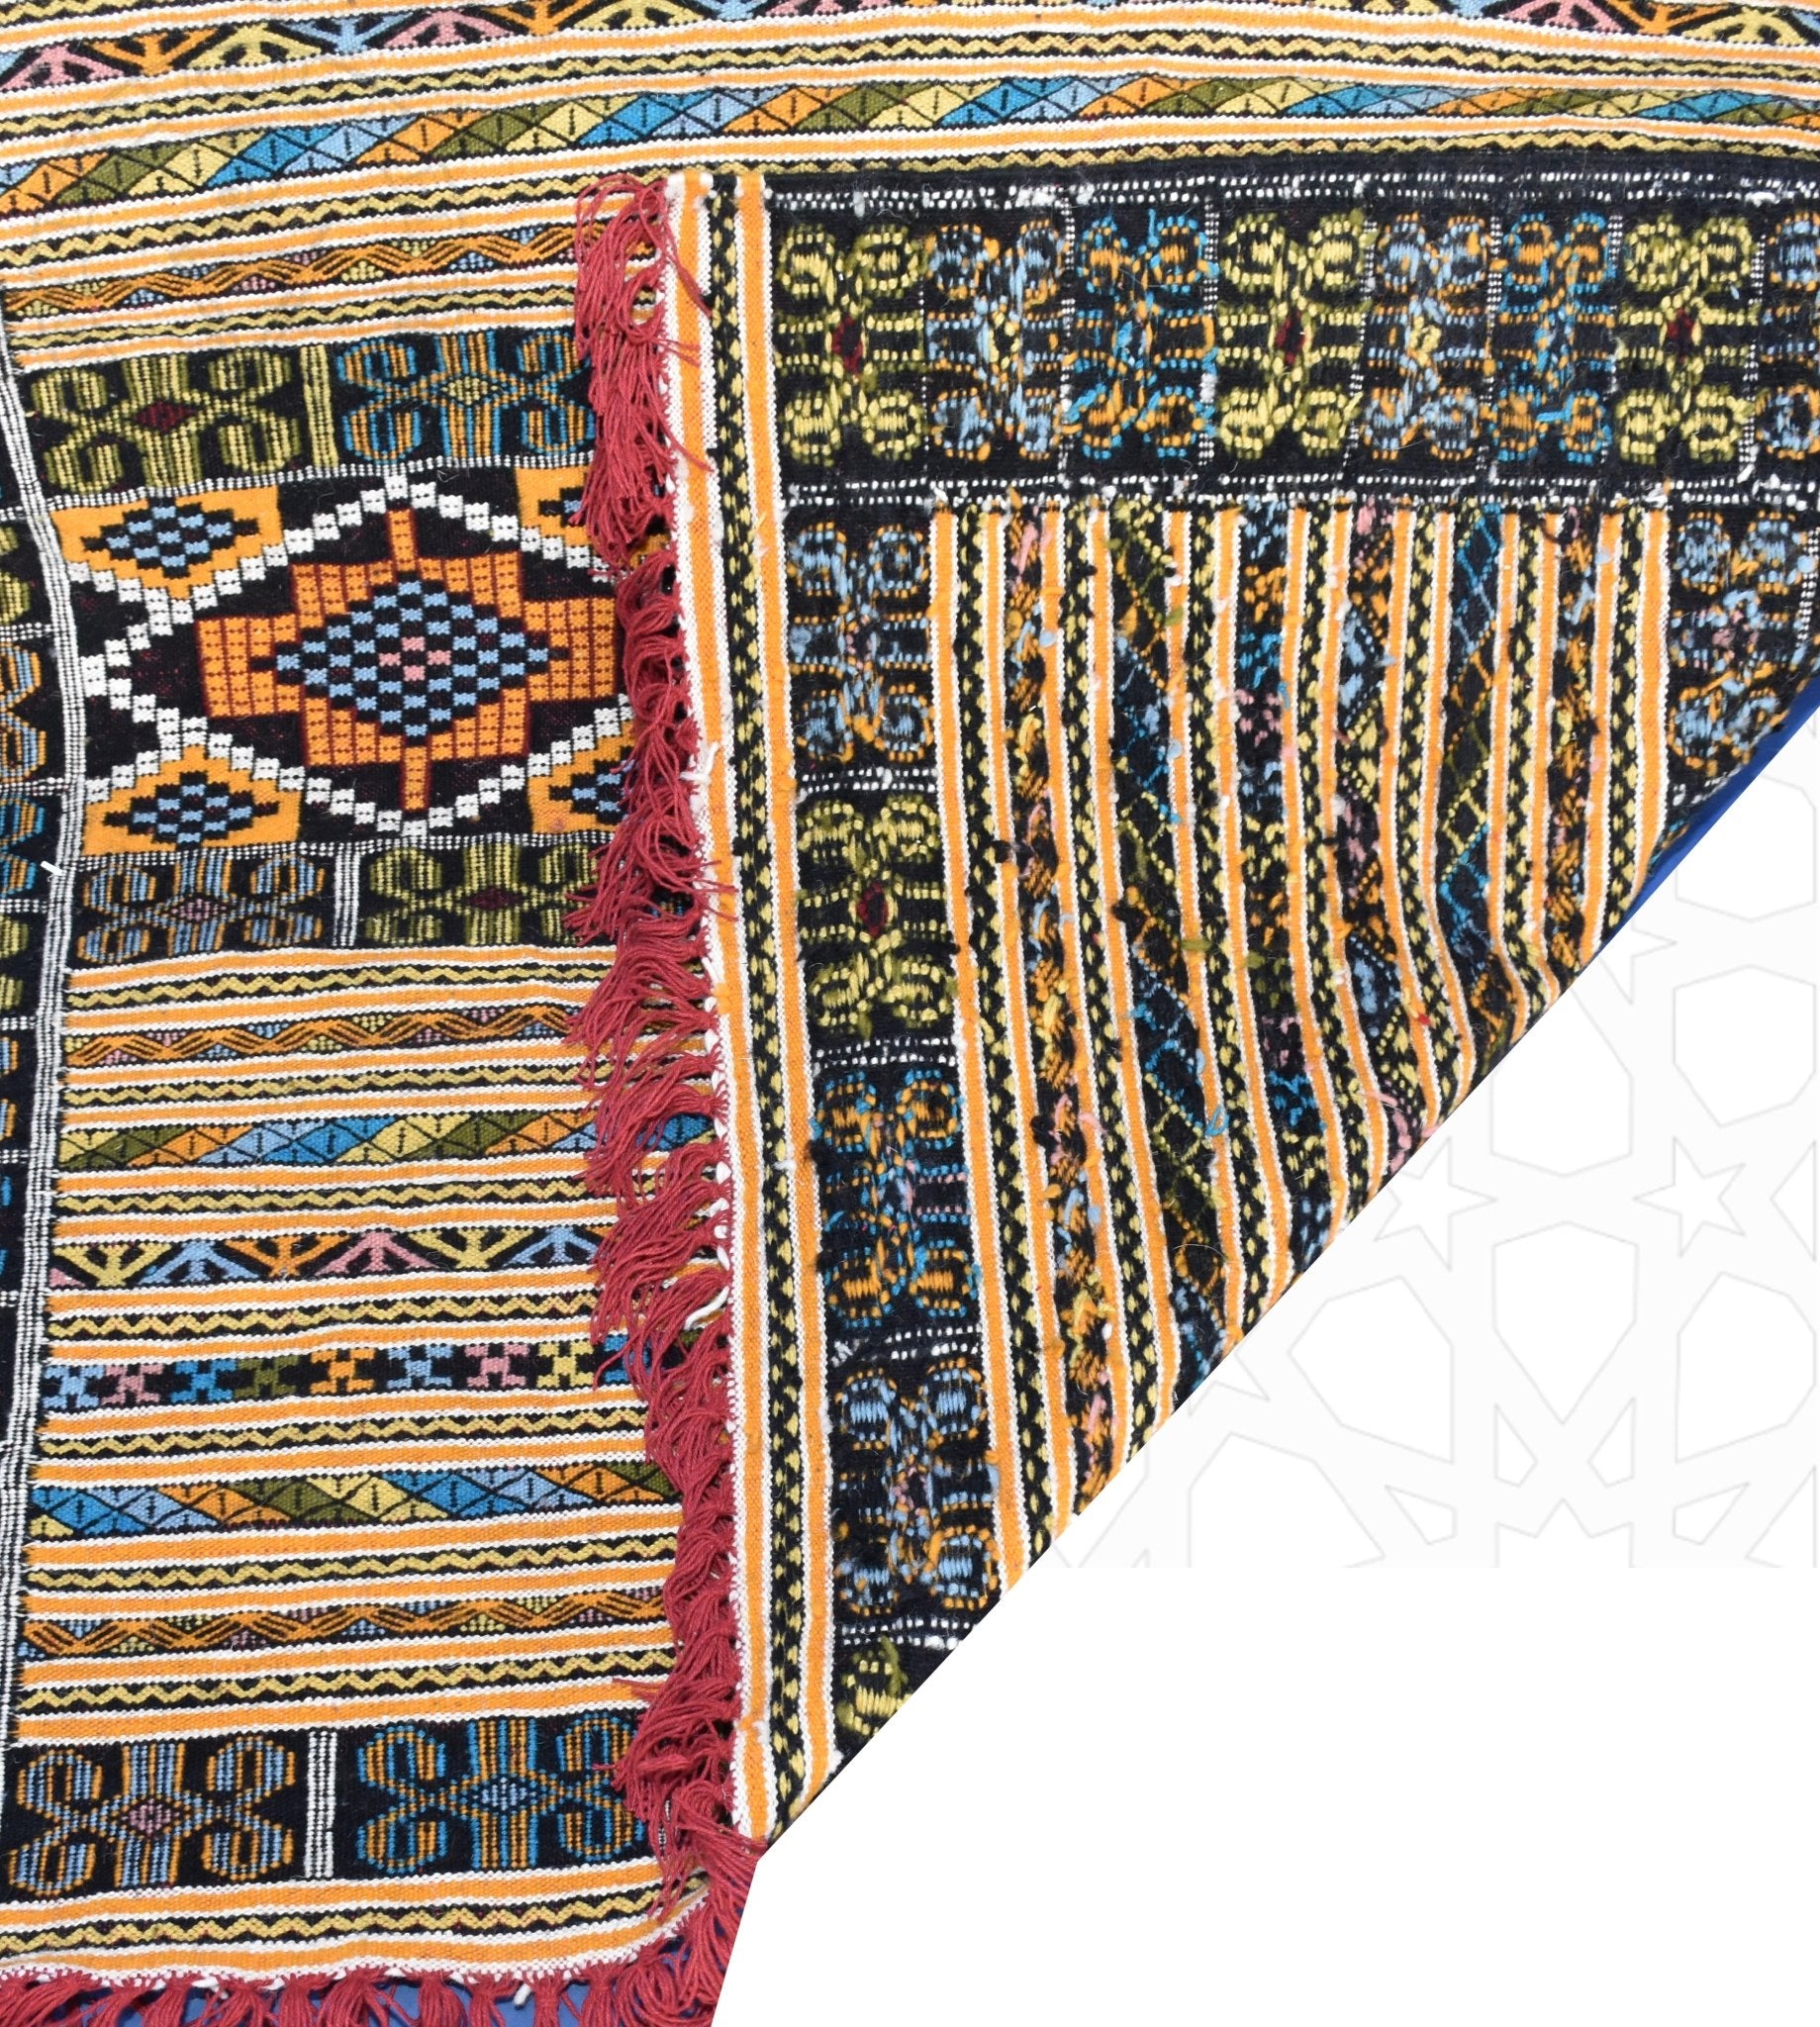 Flatweave kilim hanbal Moroccan rug - 4.76 x 6.57 ft / 145 x 200 cm - Berbers Market